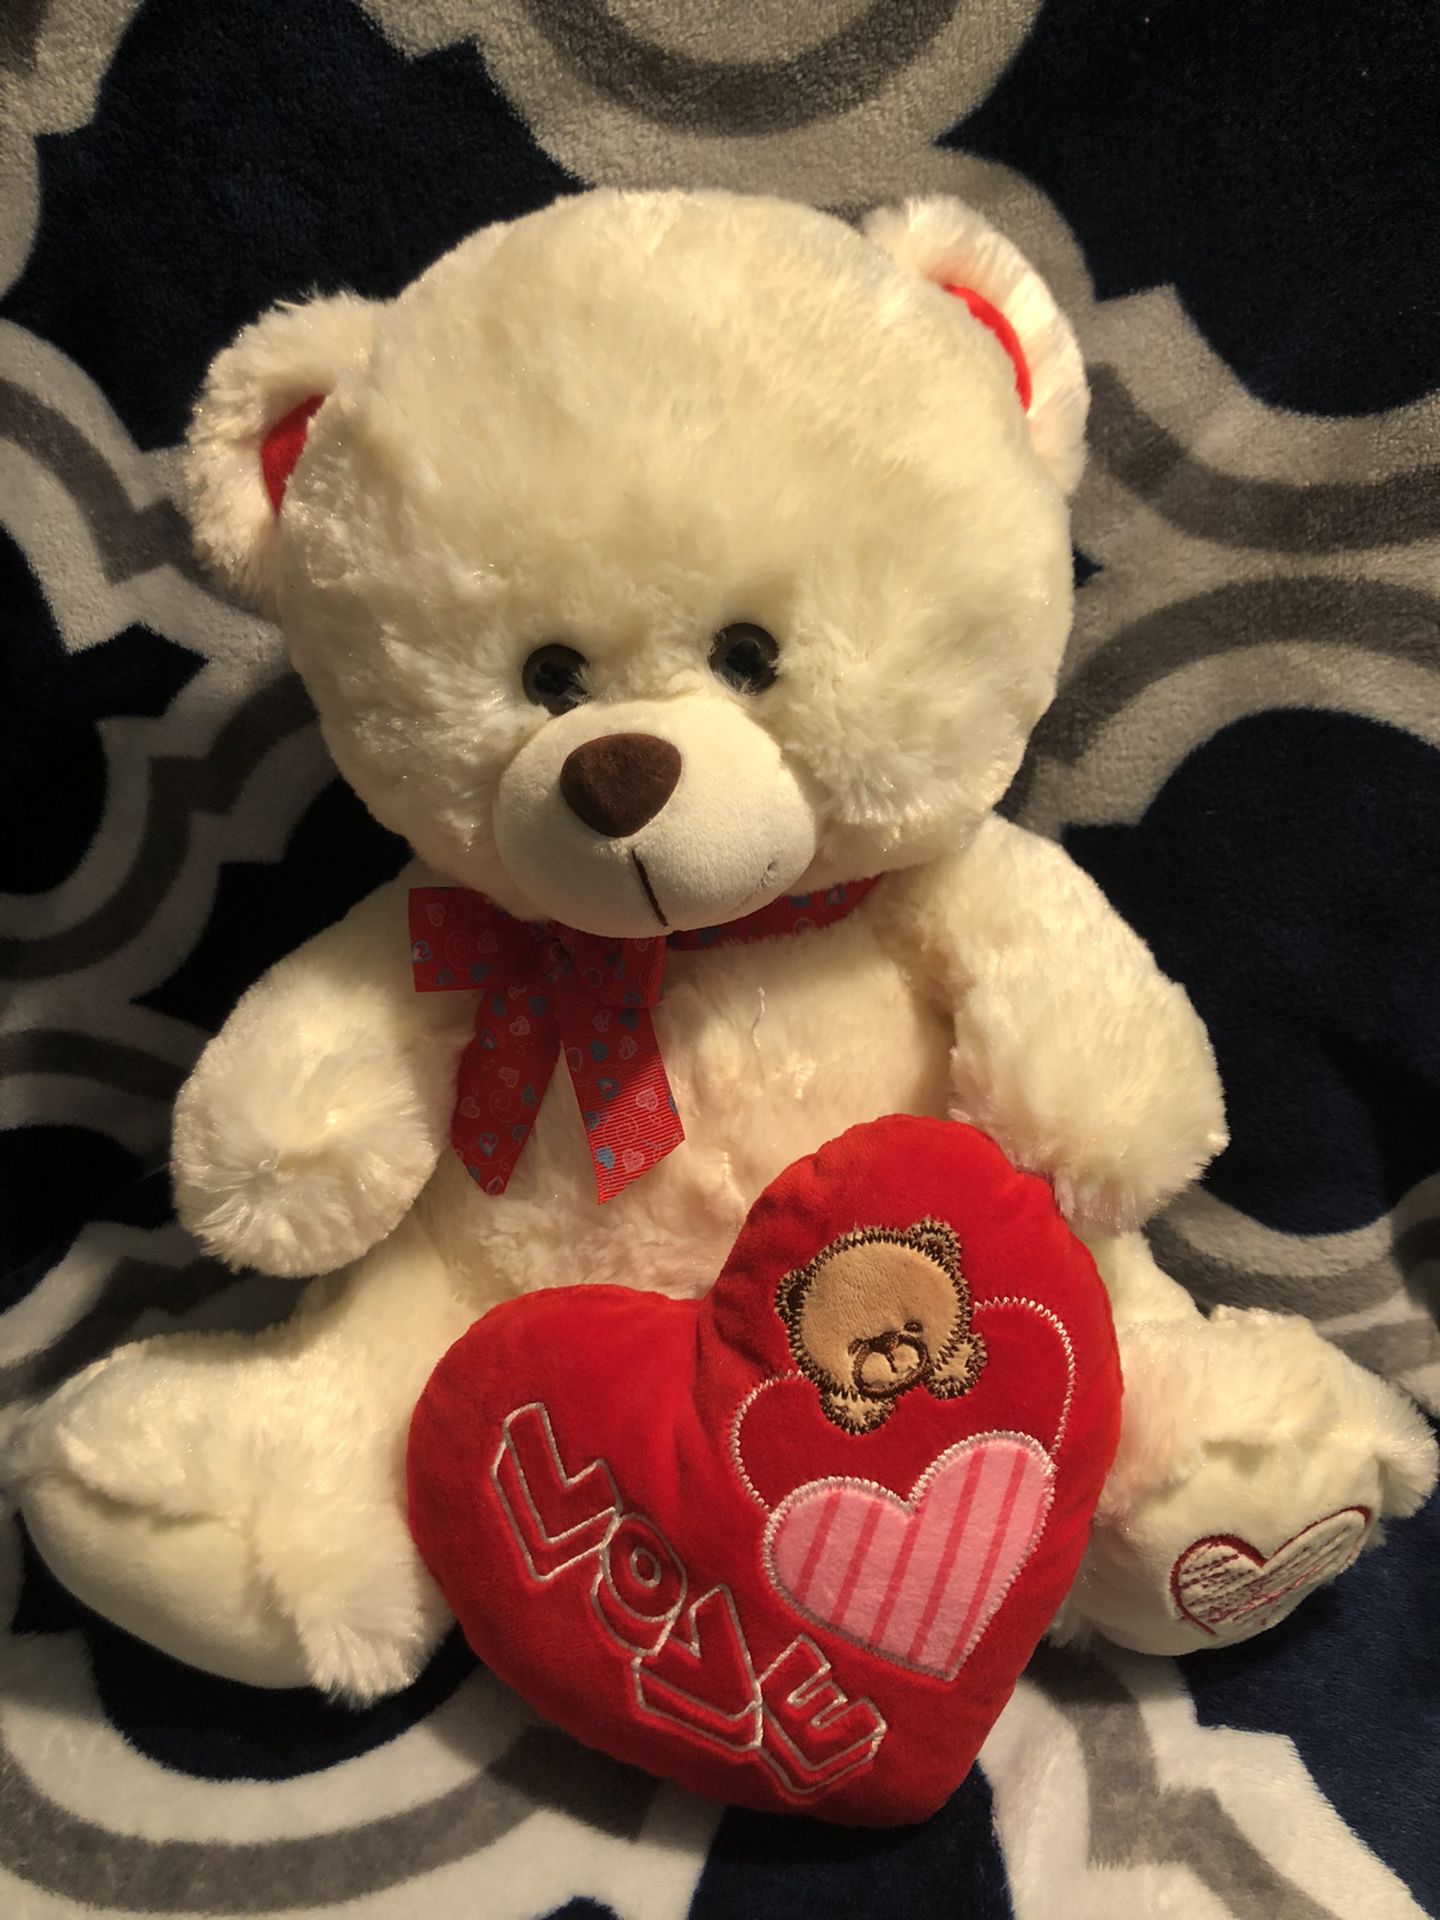 Cream colored teddy bear with heart